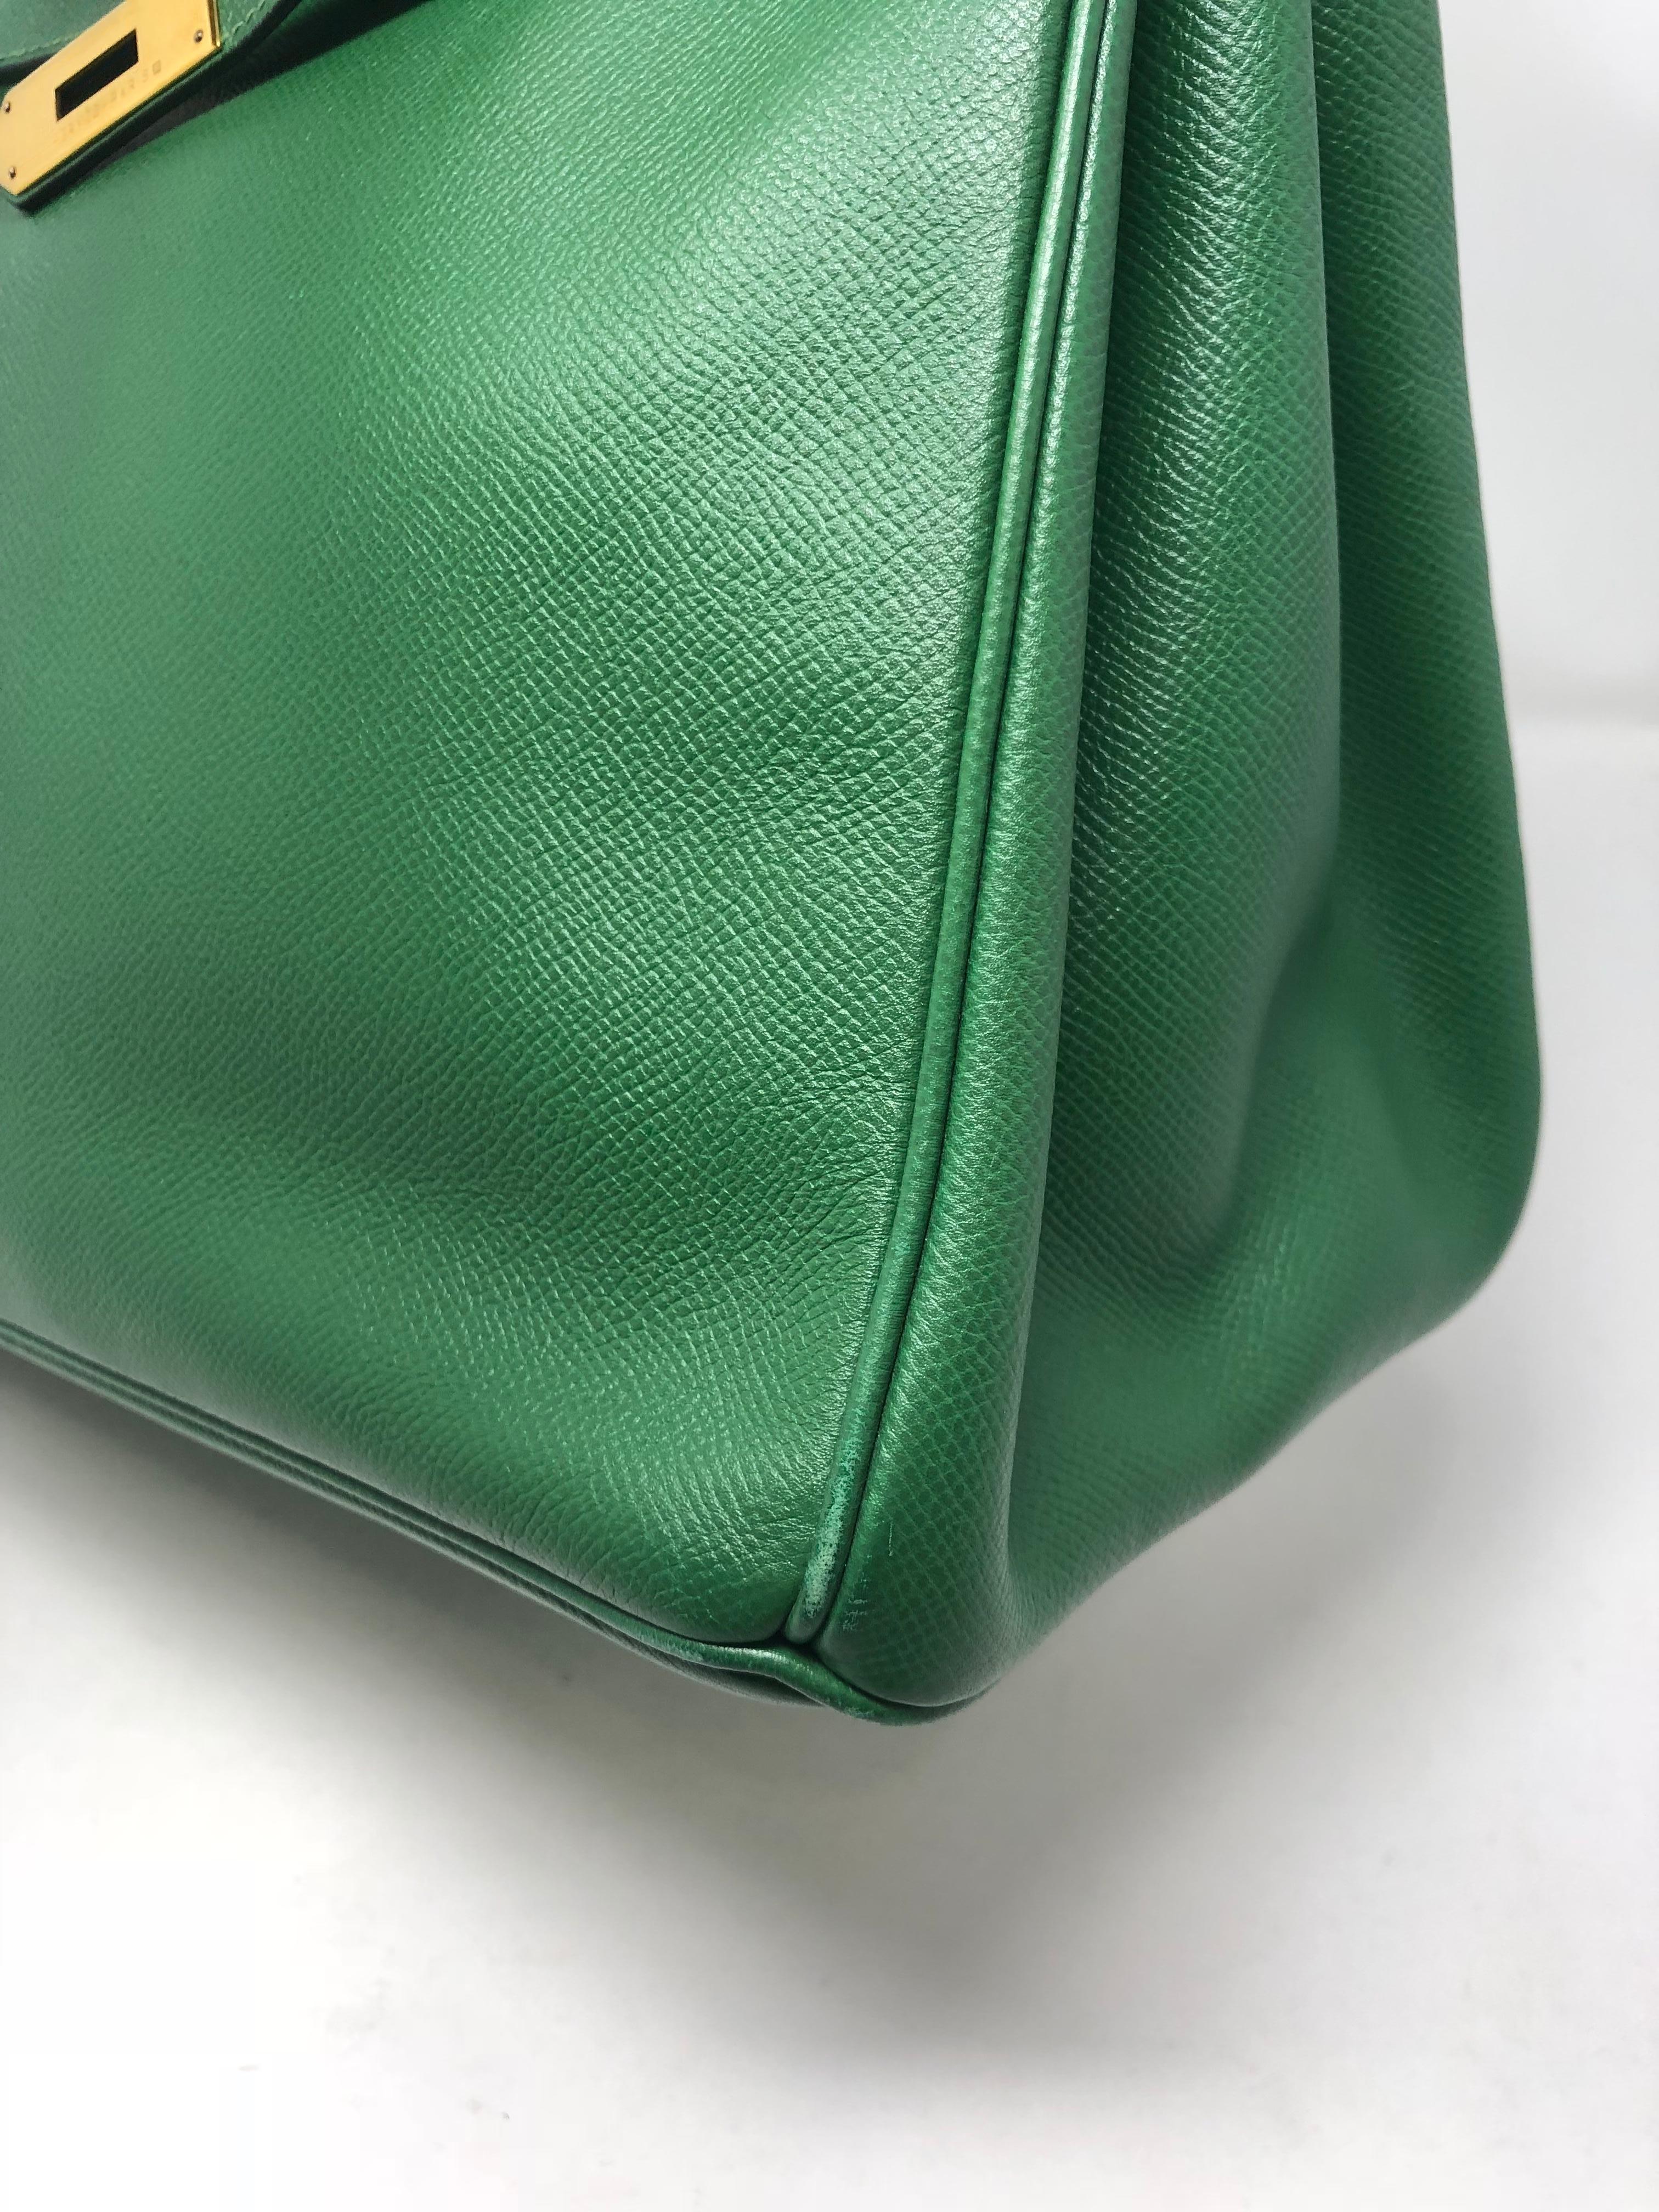 Hermes Emerald Green courchevel leather Gold hardware Birkin 35 Bag 3